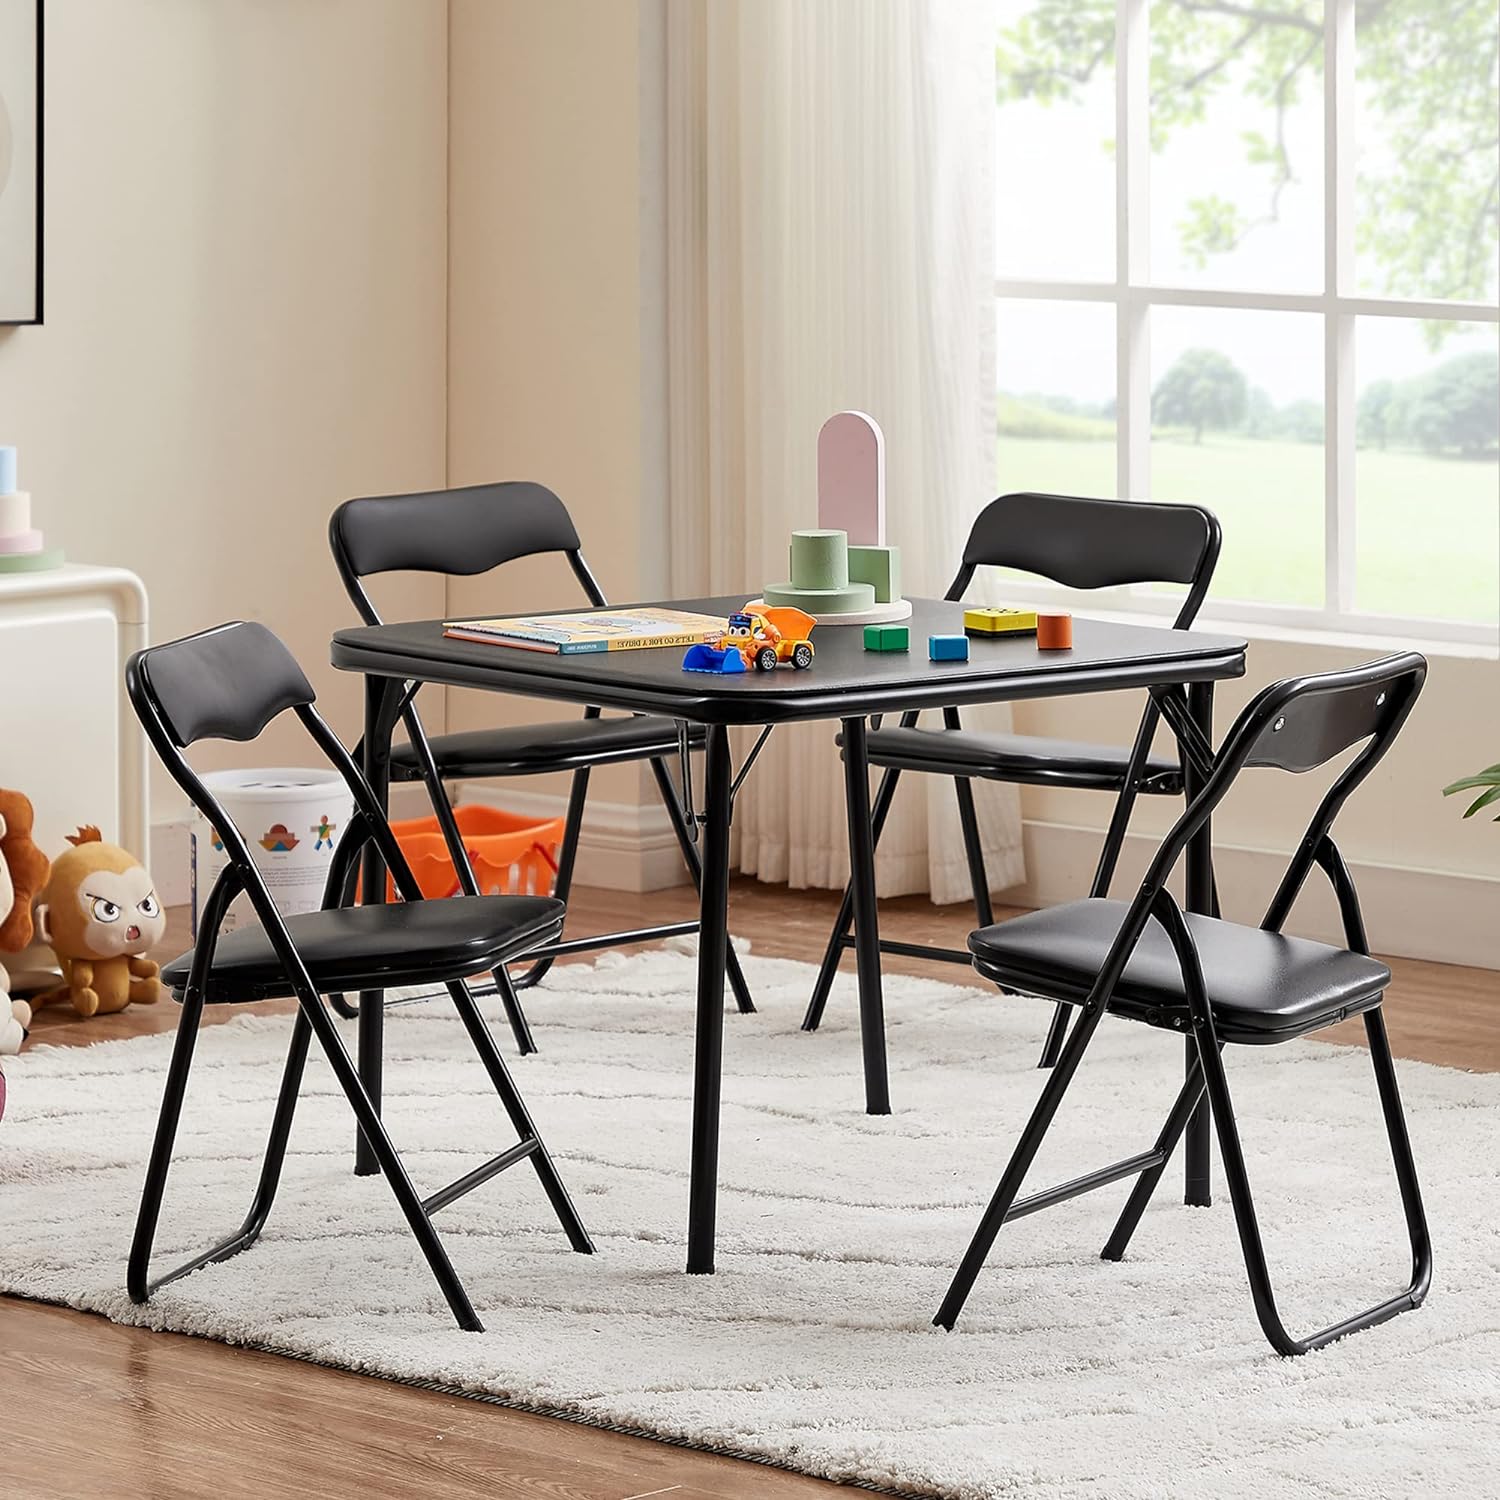 VECELO Kids Folding Activity Table and Chairs 5 Pcs Set/3 Pcs Sets, Portable